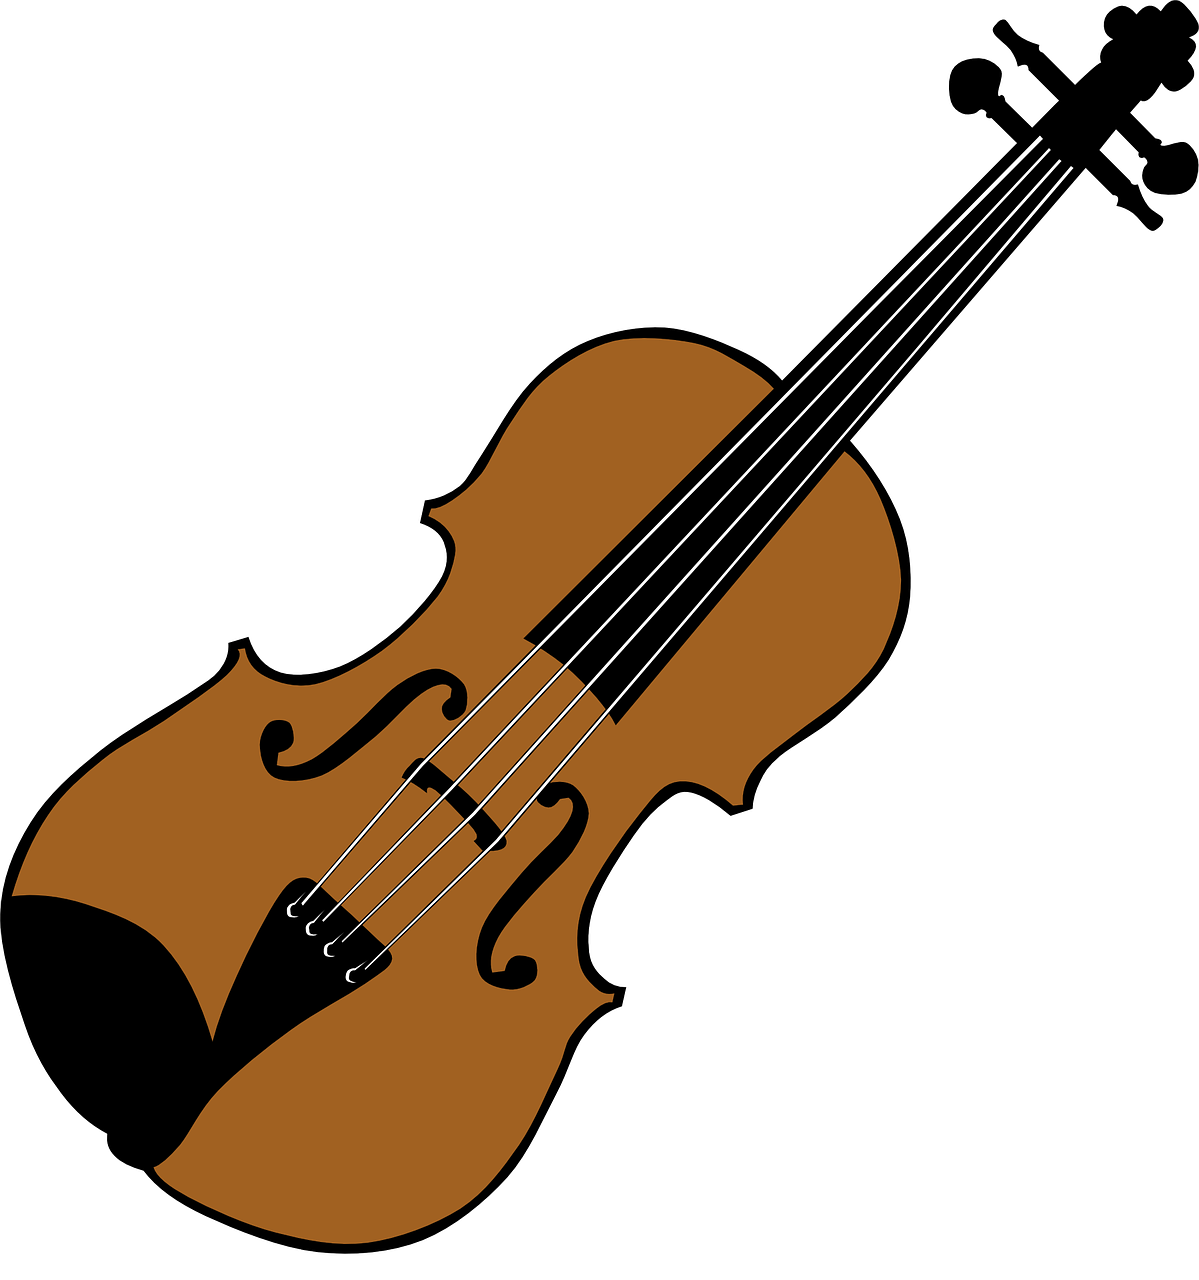 A Brown And Black Violin